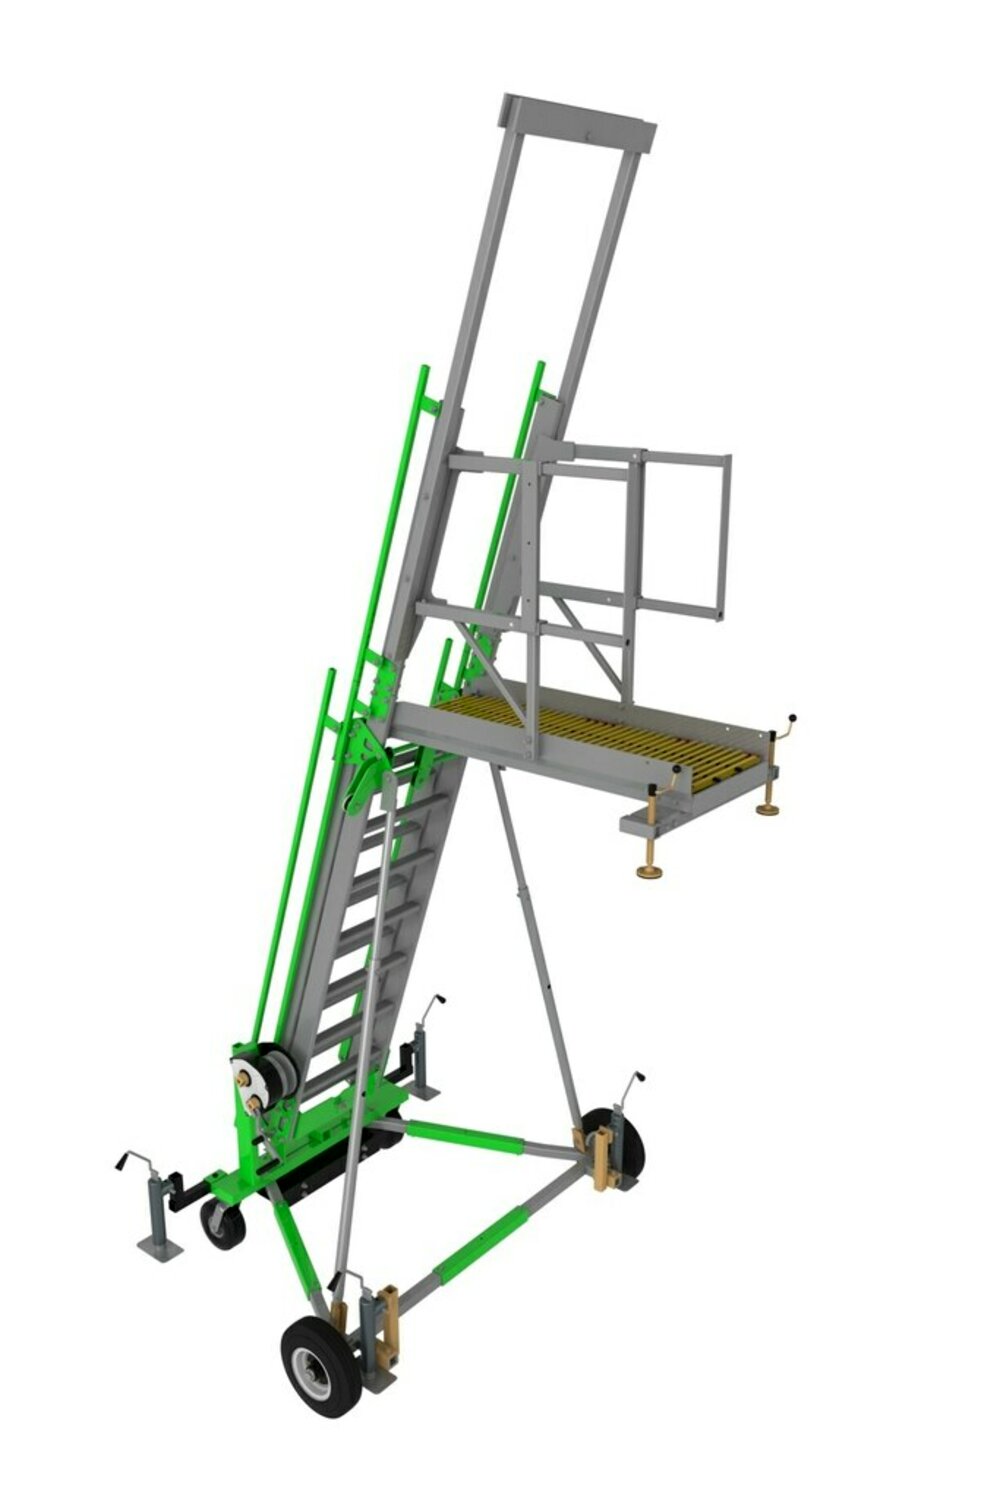 7012755908 - 3M DBI-SALA Flexiguard Freestanding Ladder Adjustable Height Access Anchor System 8567719, 2 User, 18.5 – 31 ft.